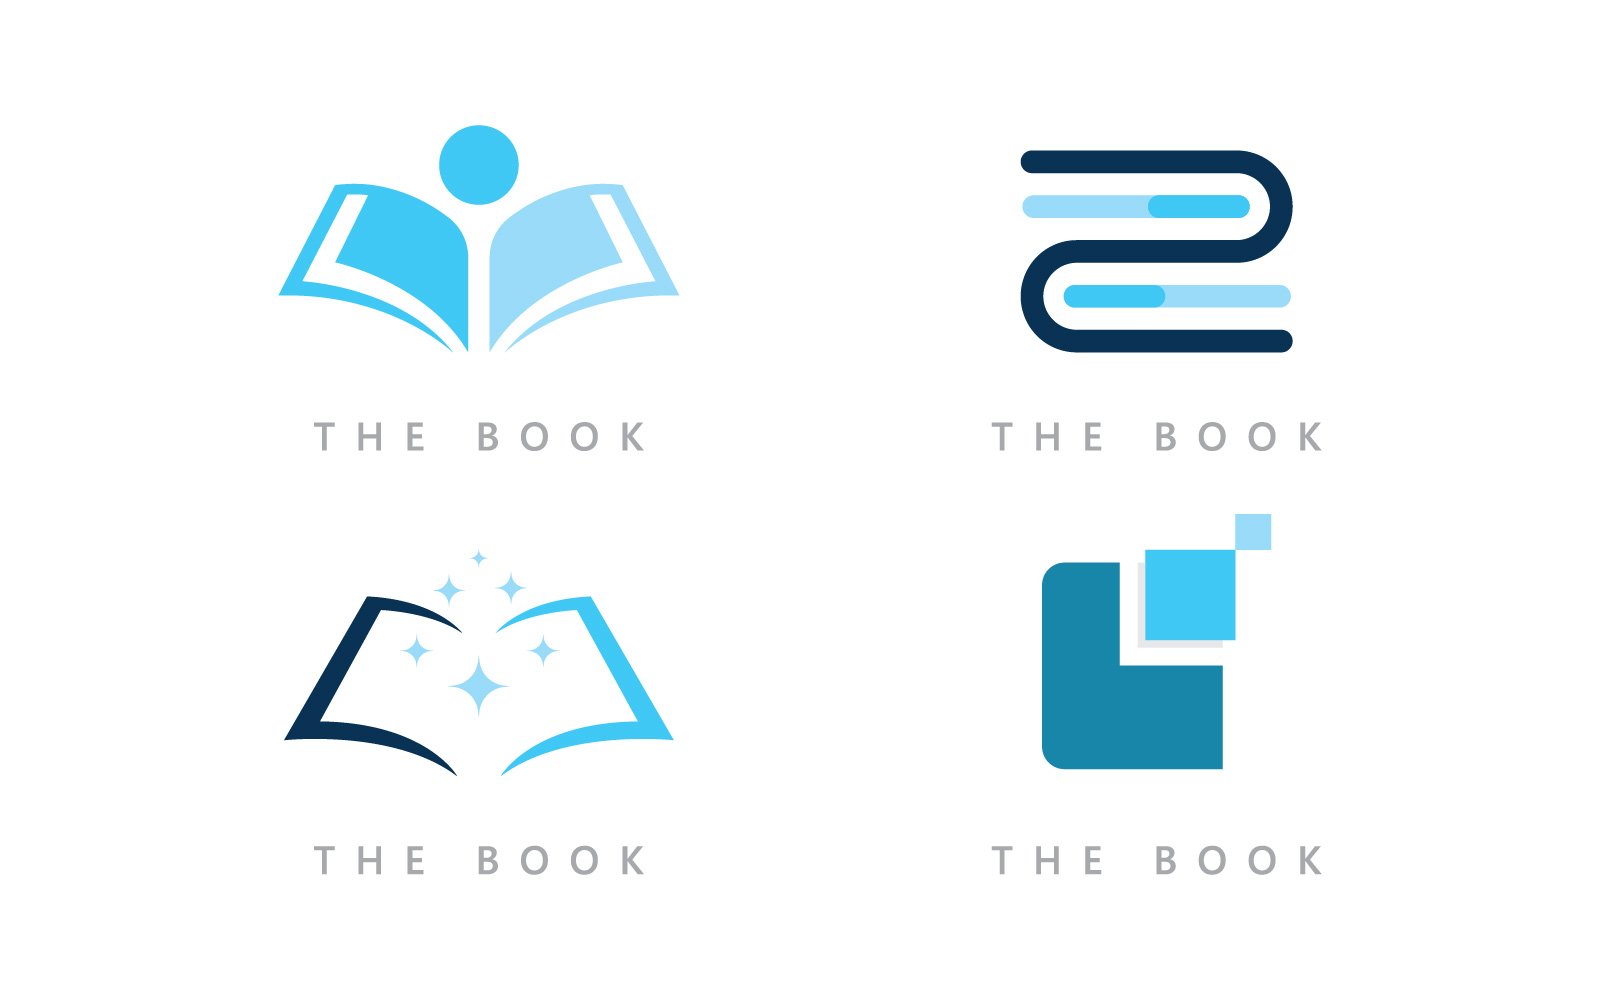 Education logo icon template. open book illustration V0